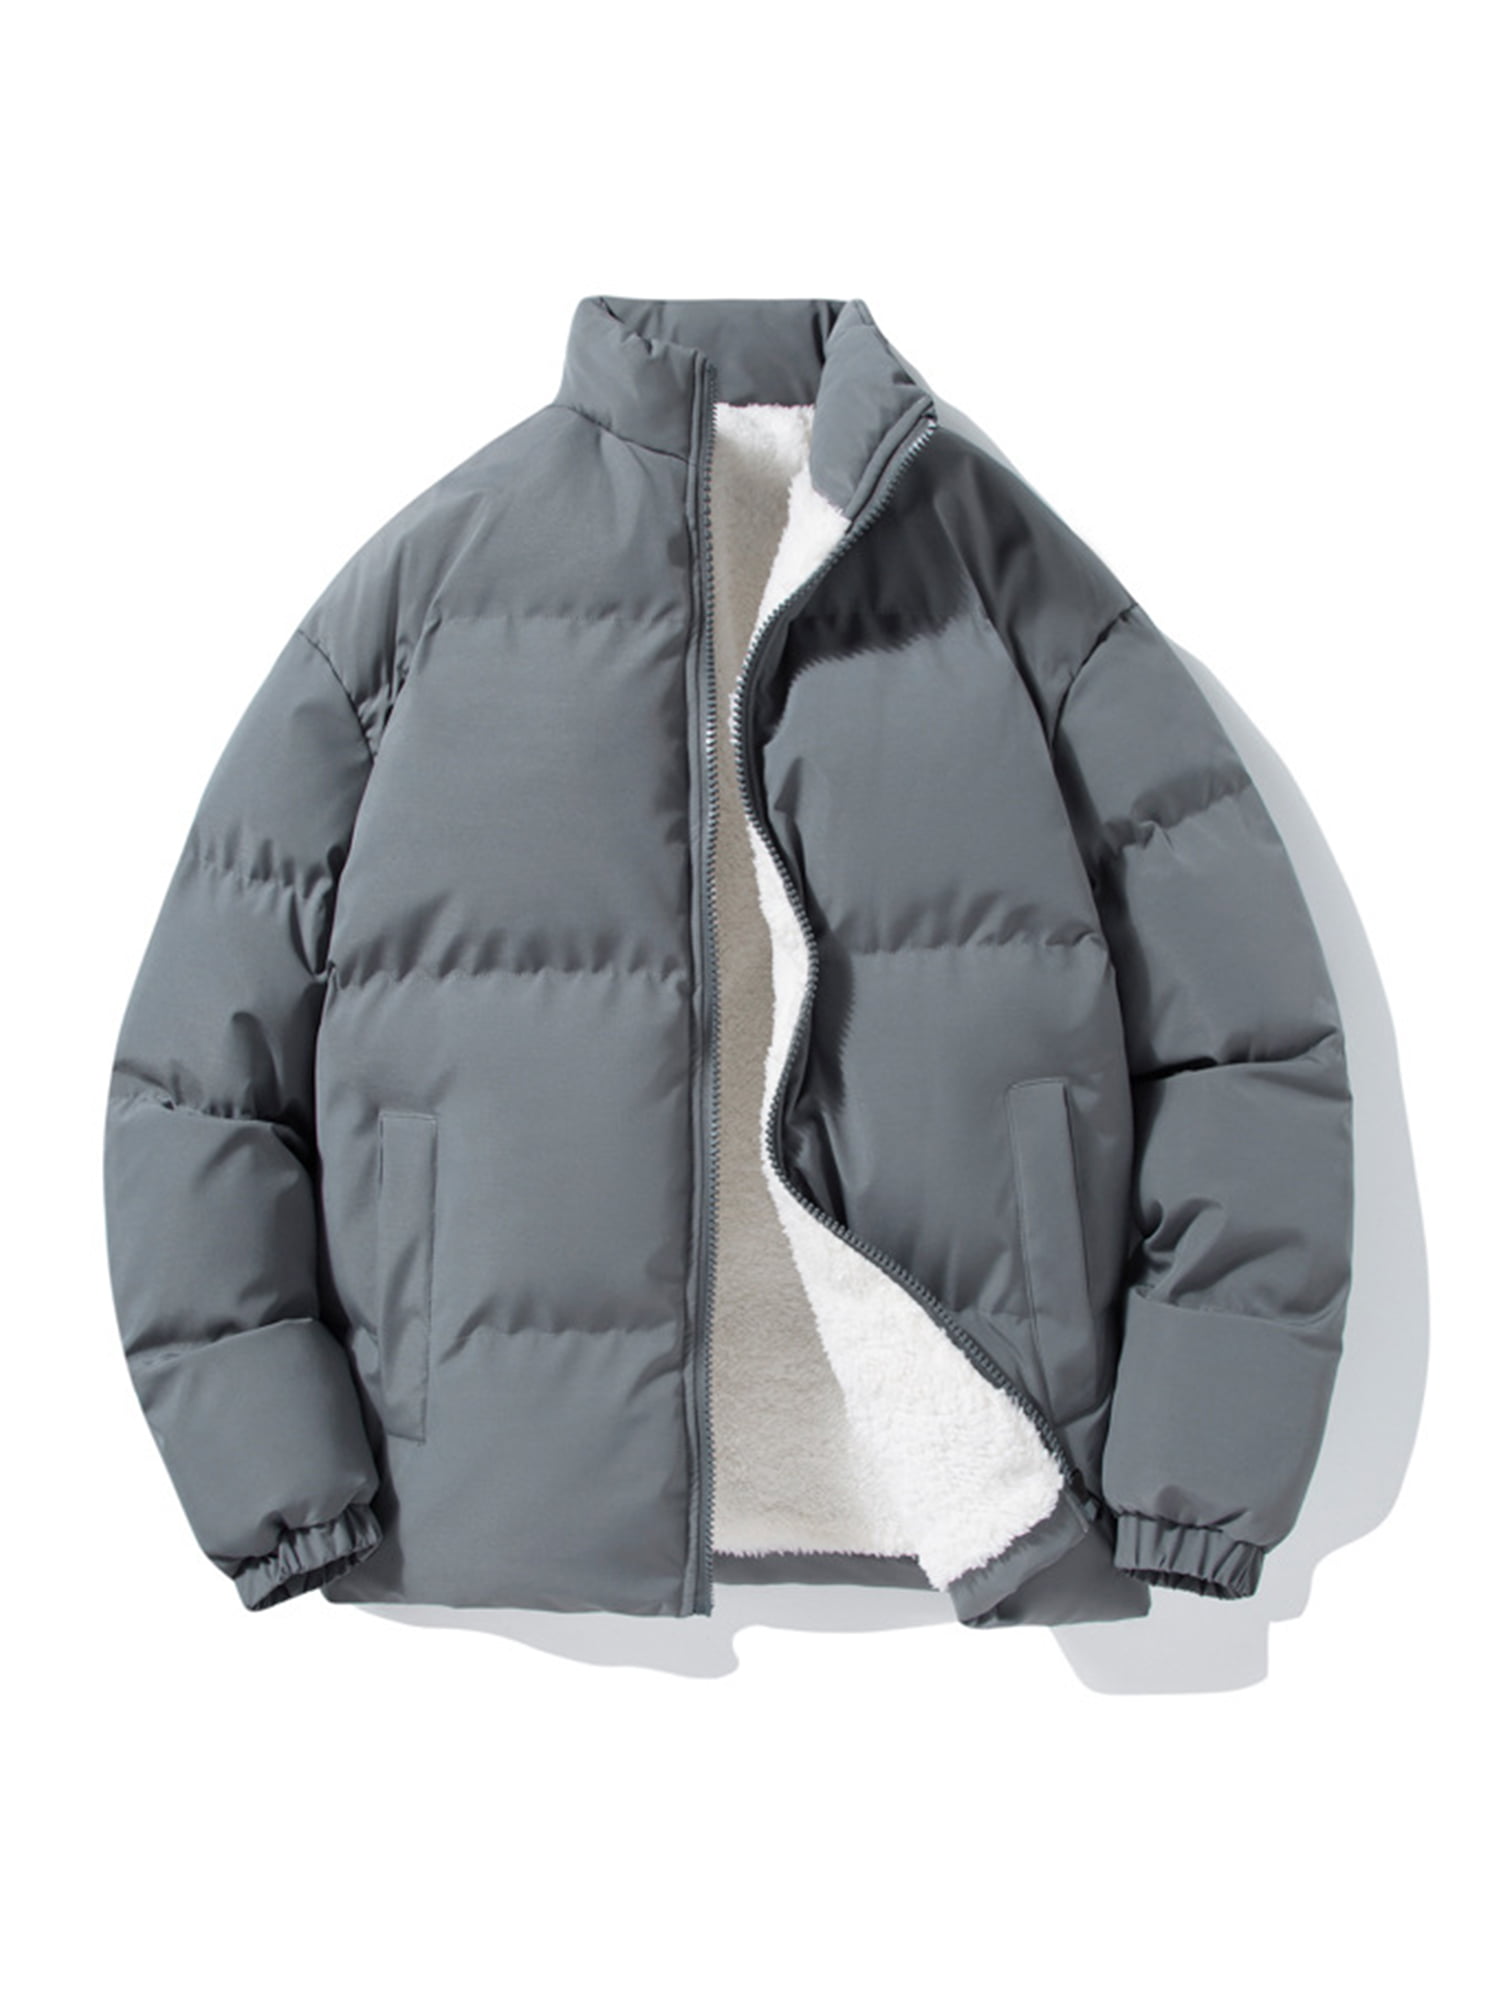 Würth MODYF Gray Camouflage Full Zip Jacket Coat Size L Workwear Hiking  Sports